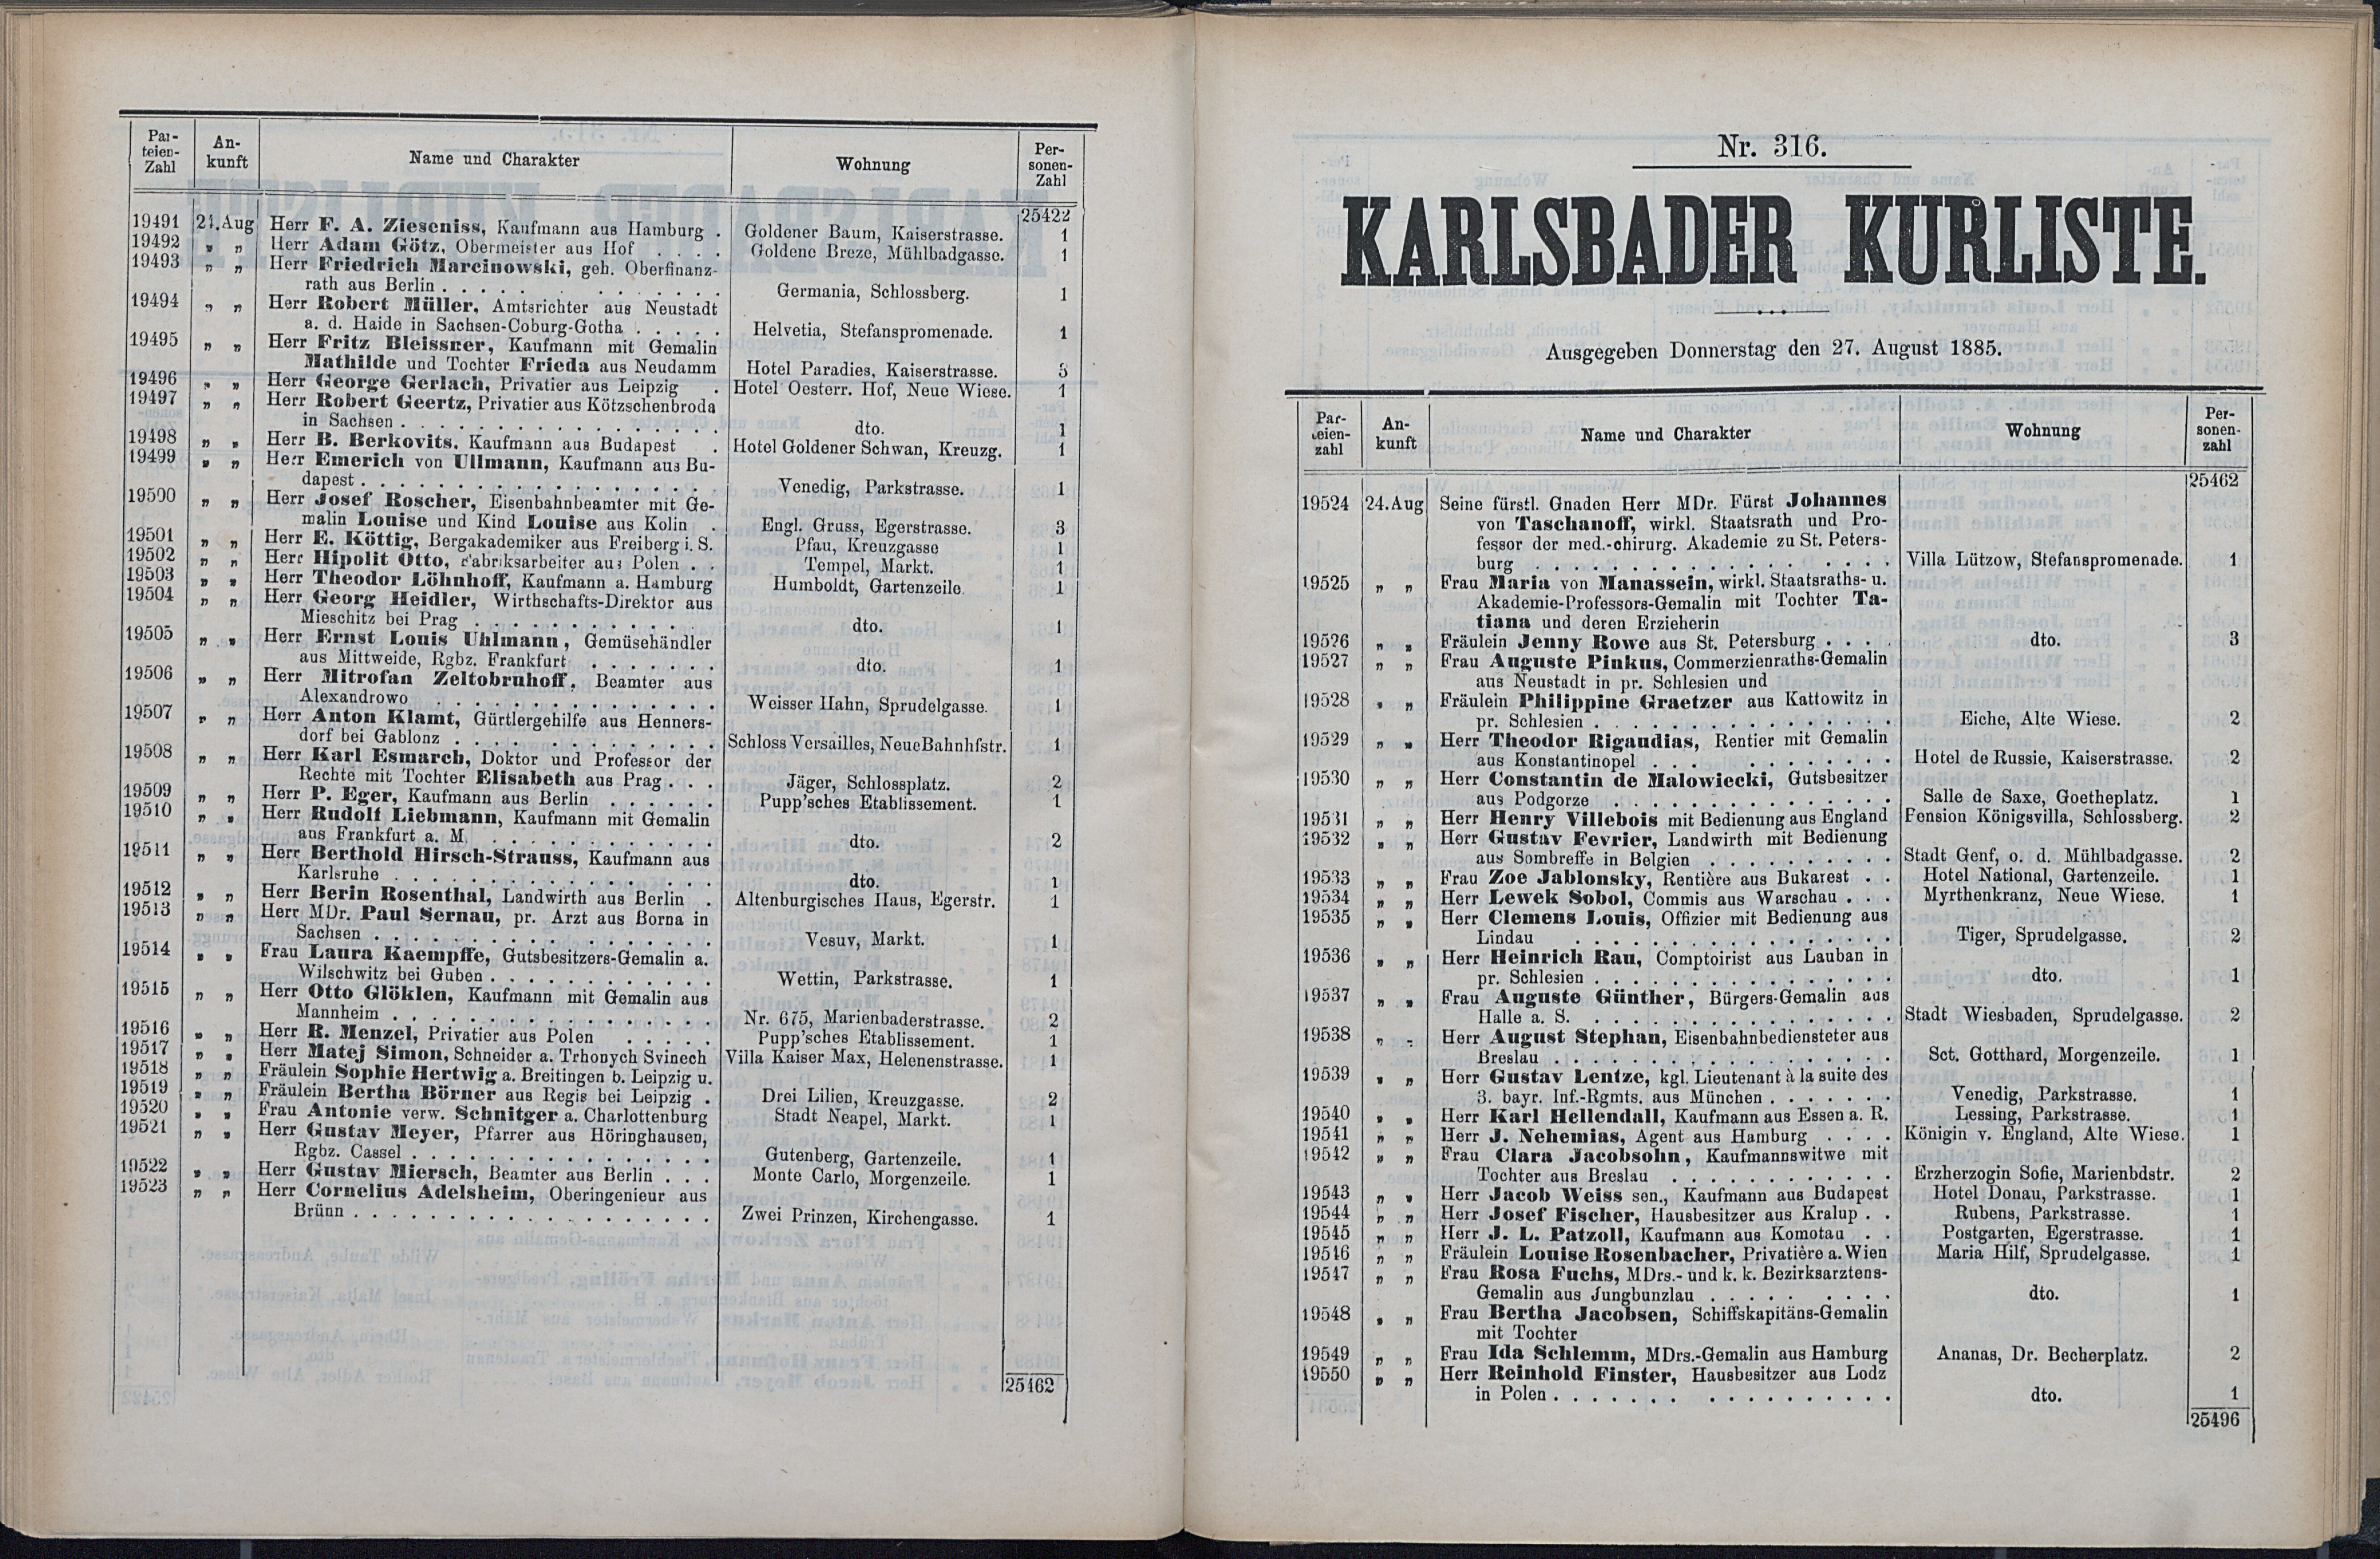 368. soap-kv_knihovna_karlsbader-kurliste-1885_3690